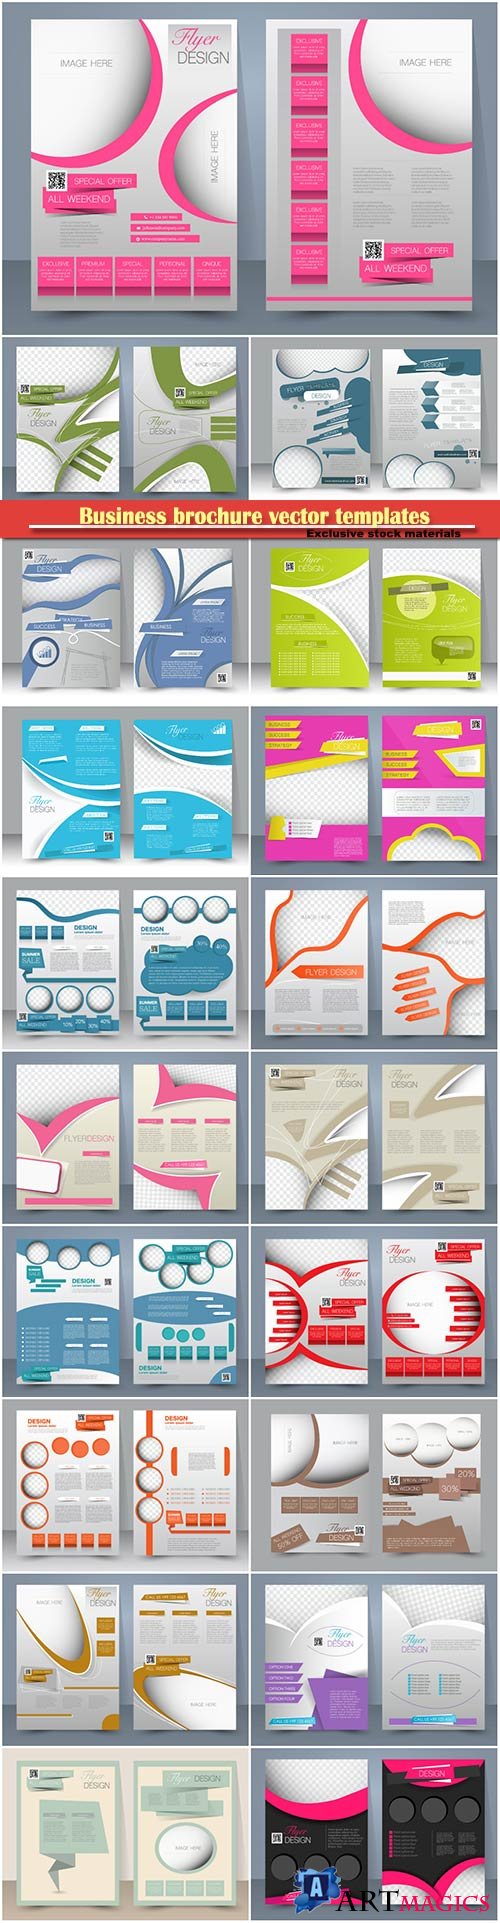 Business brochure vector templates, magazine cover, business mockup, education, presentation, report # 71